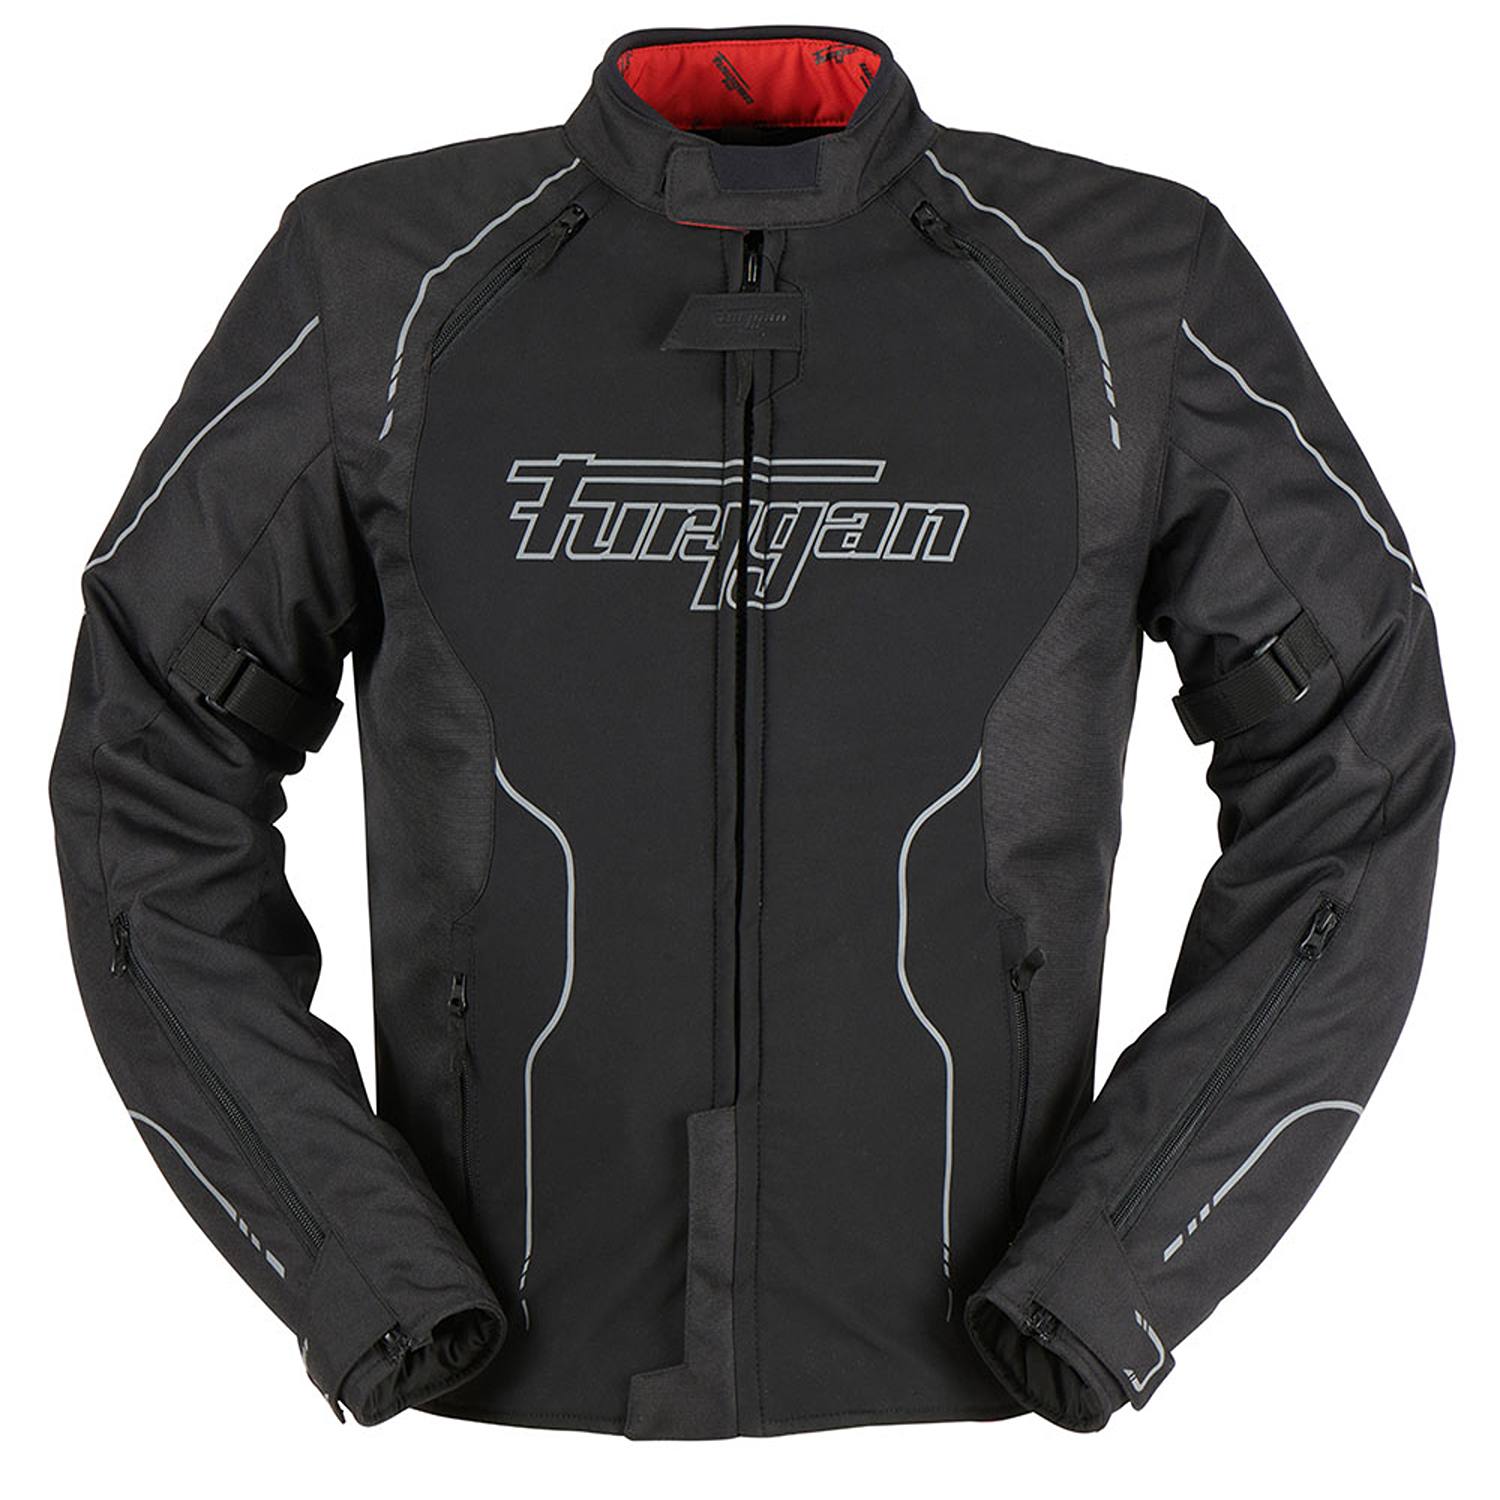 Image of Furygan Legacy 2W1 Jacket Black Reflective Grey Size M ID 3435980340537